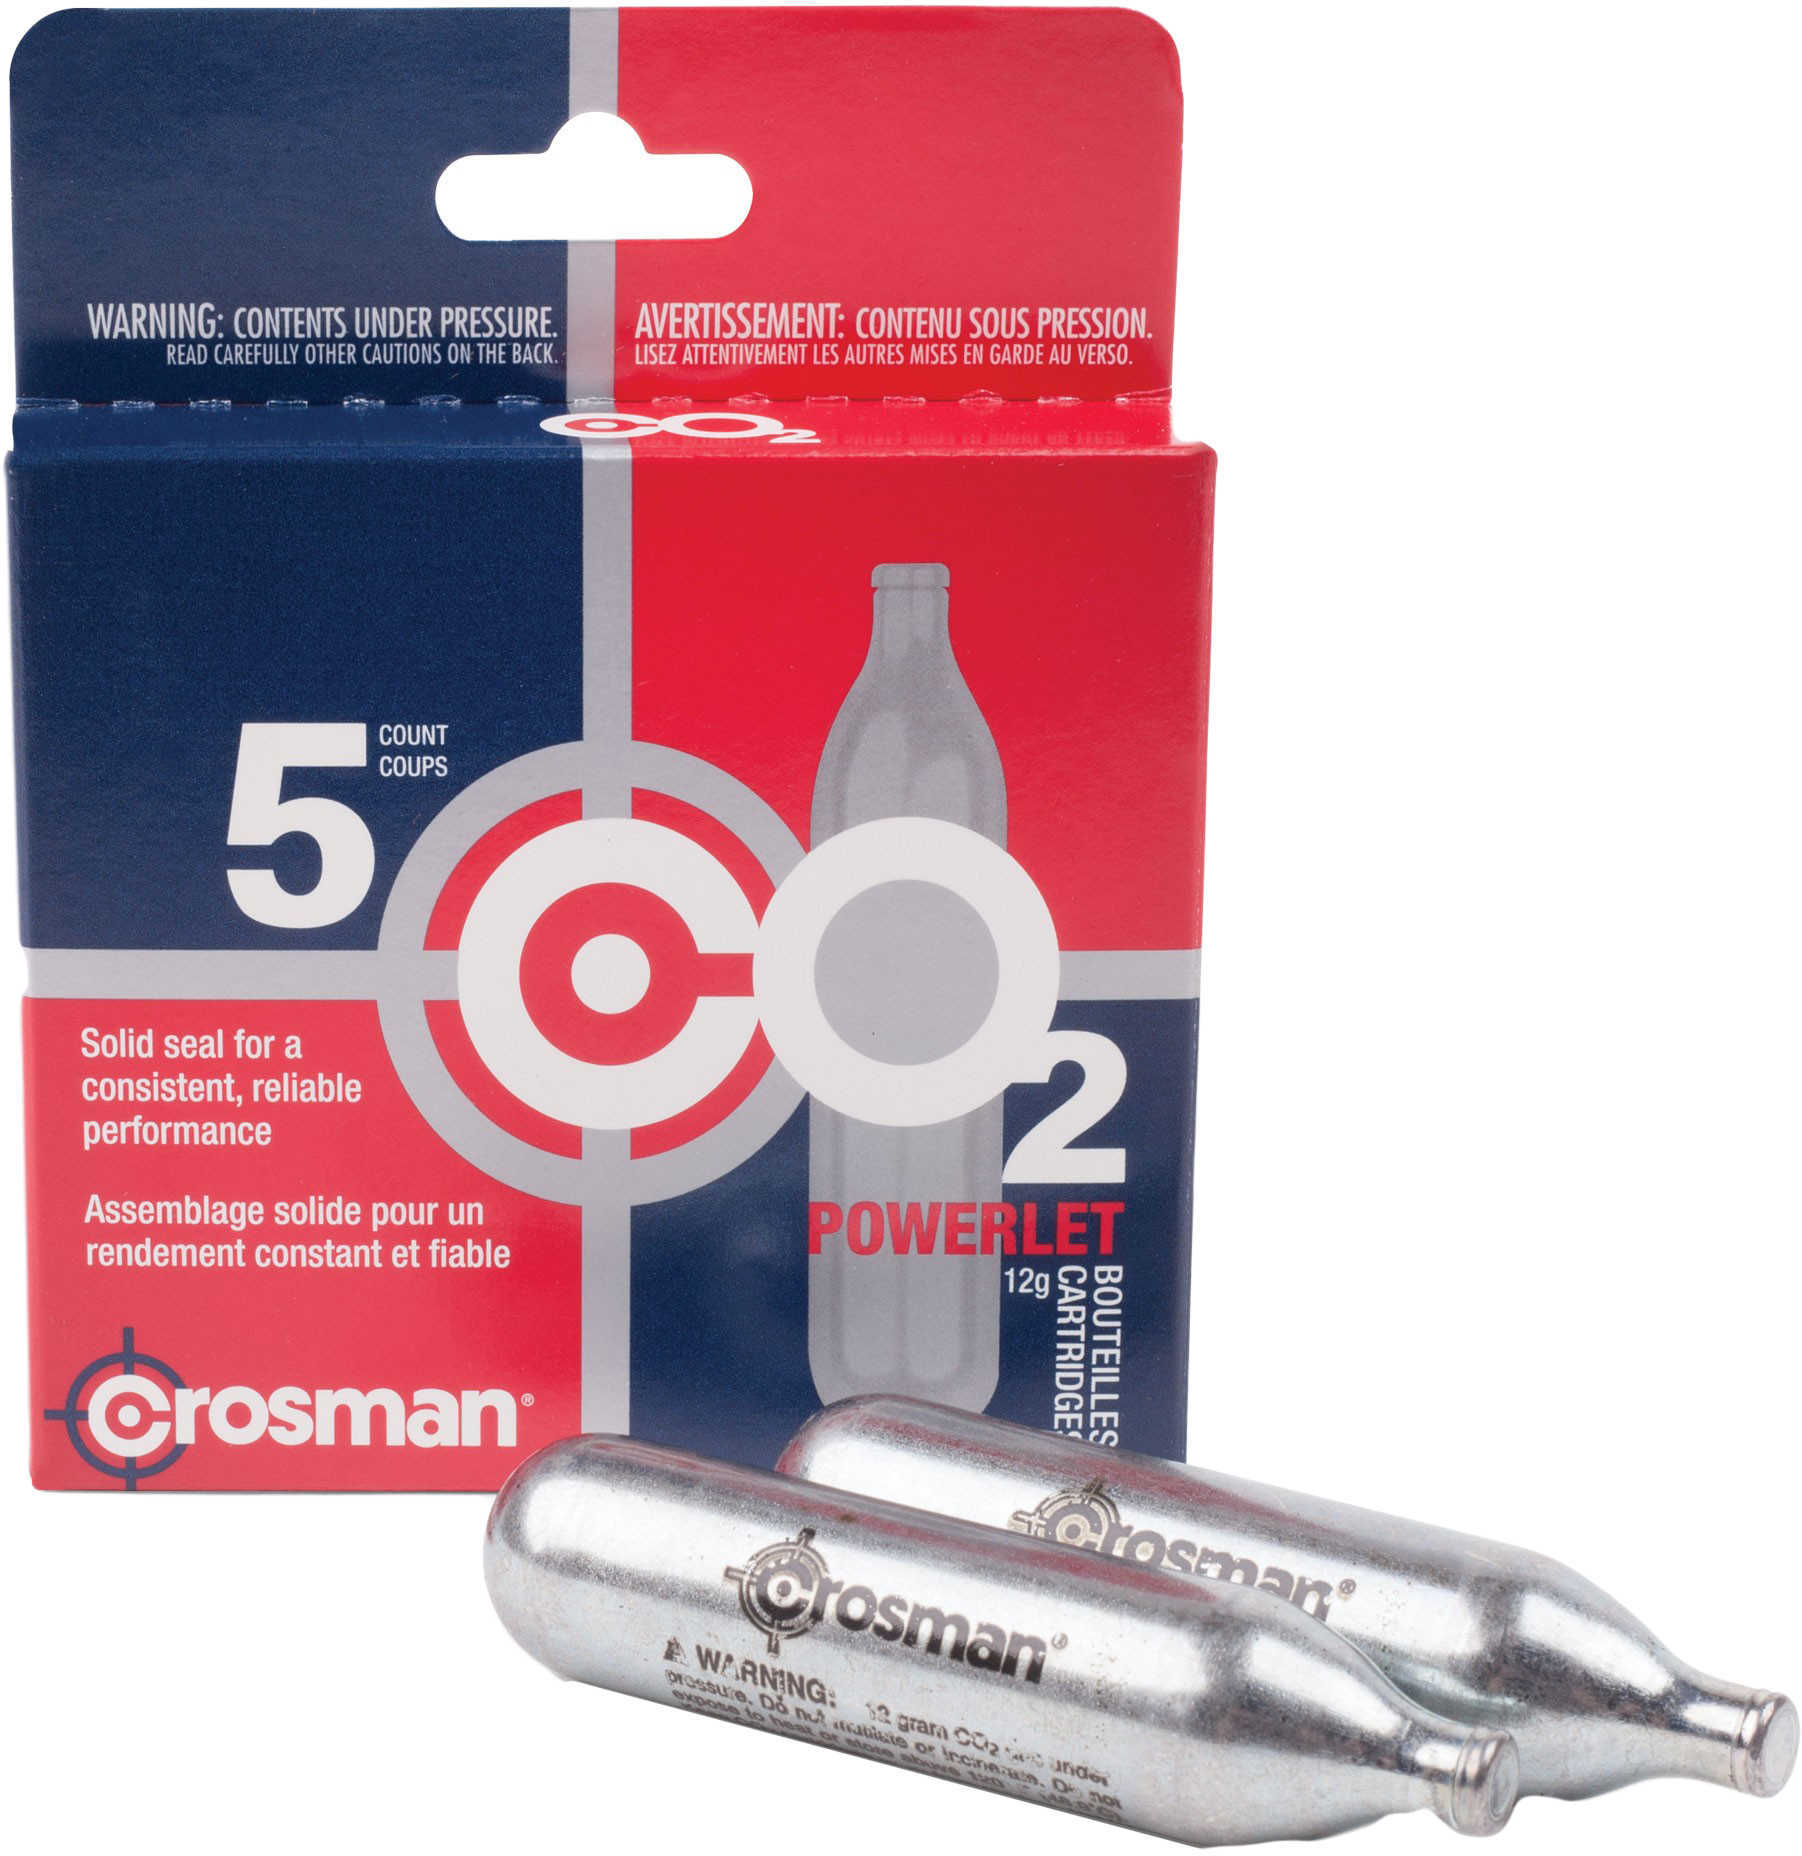 Crosman Co2 POWERLETS- Case Of 12 Boxes Of 5 Each